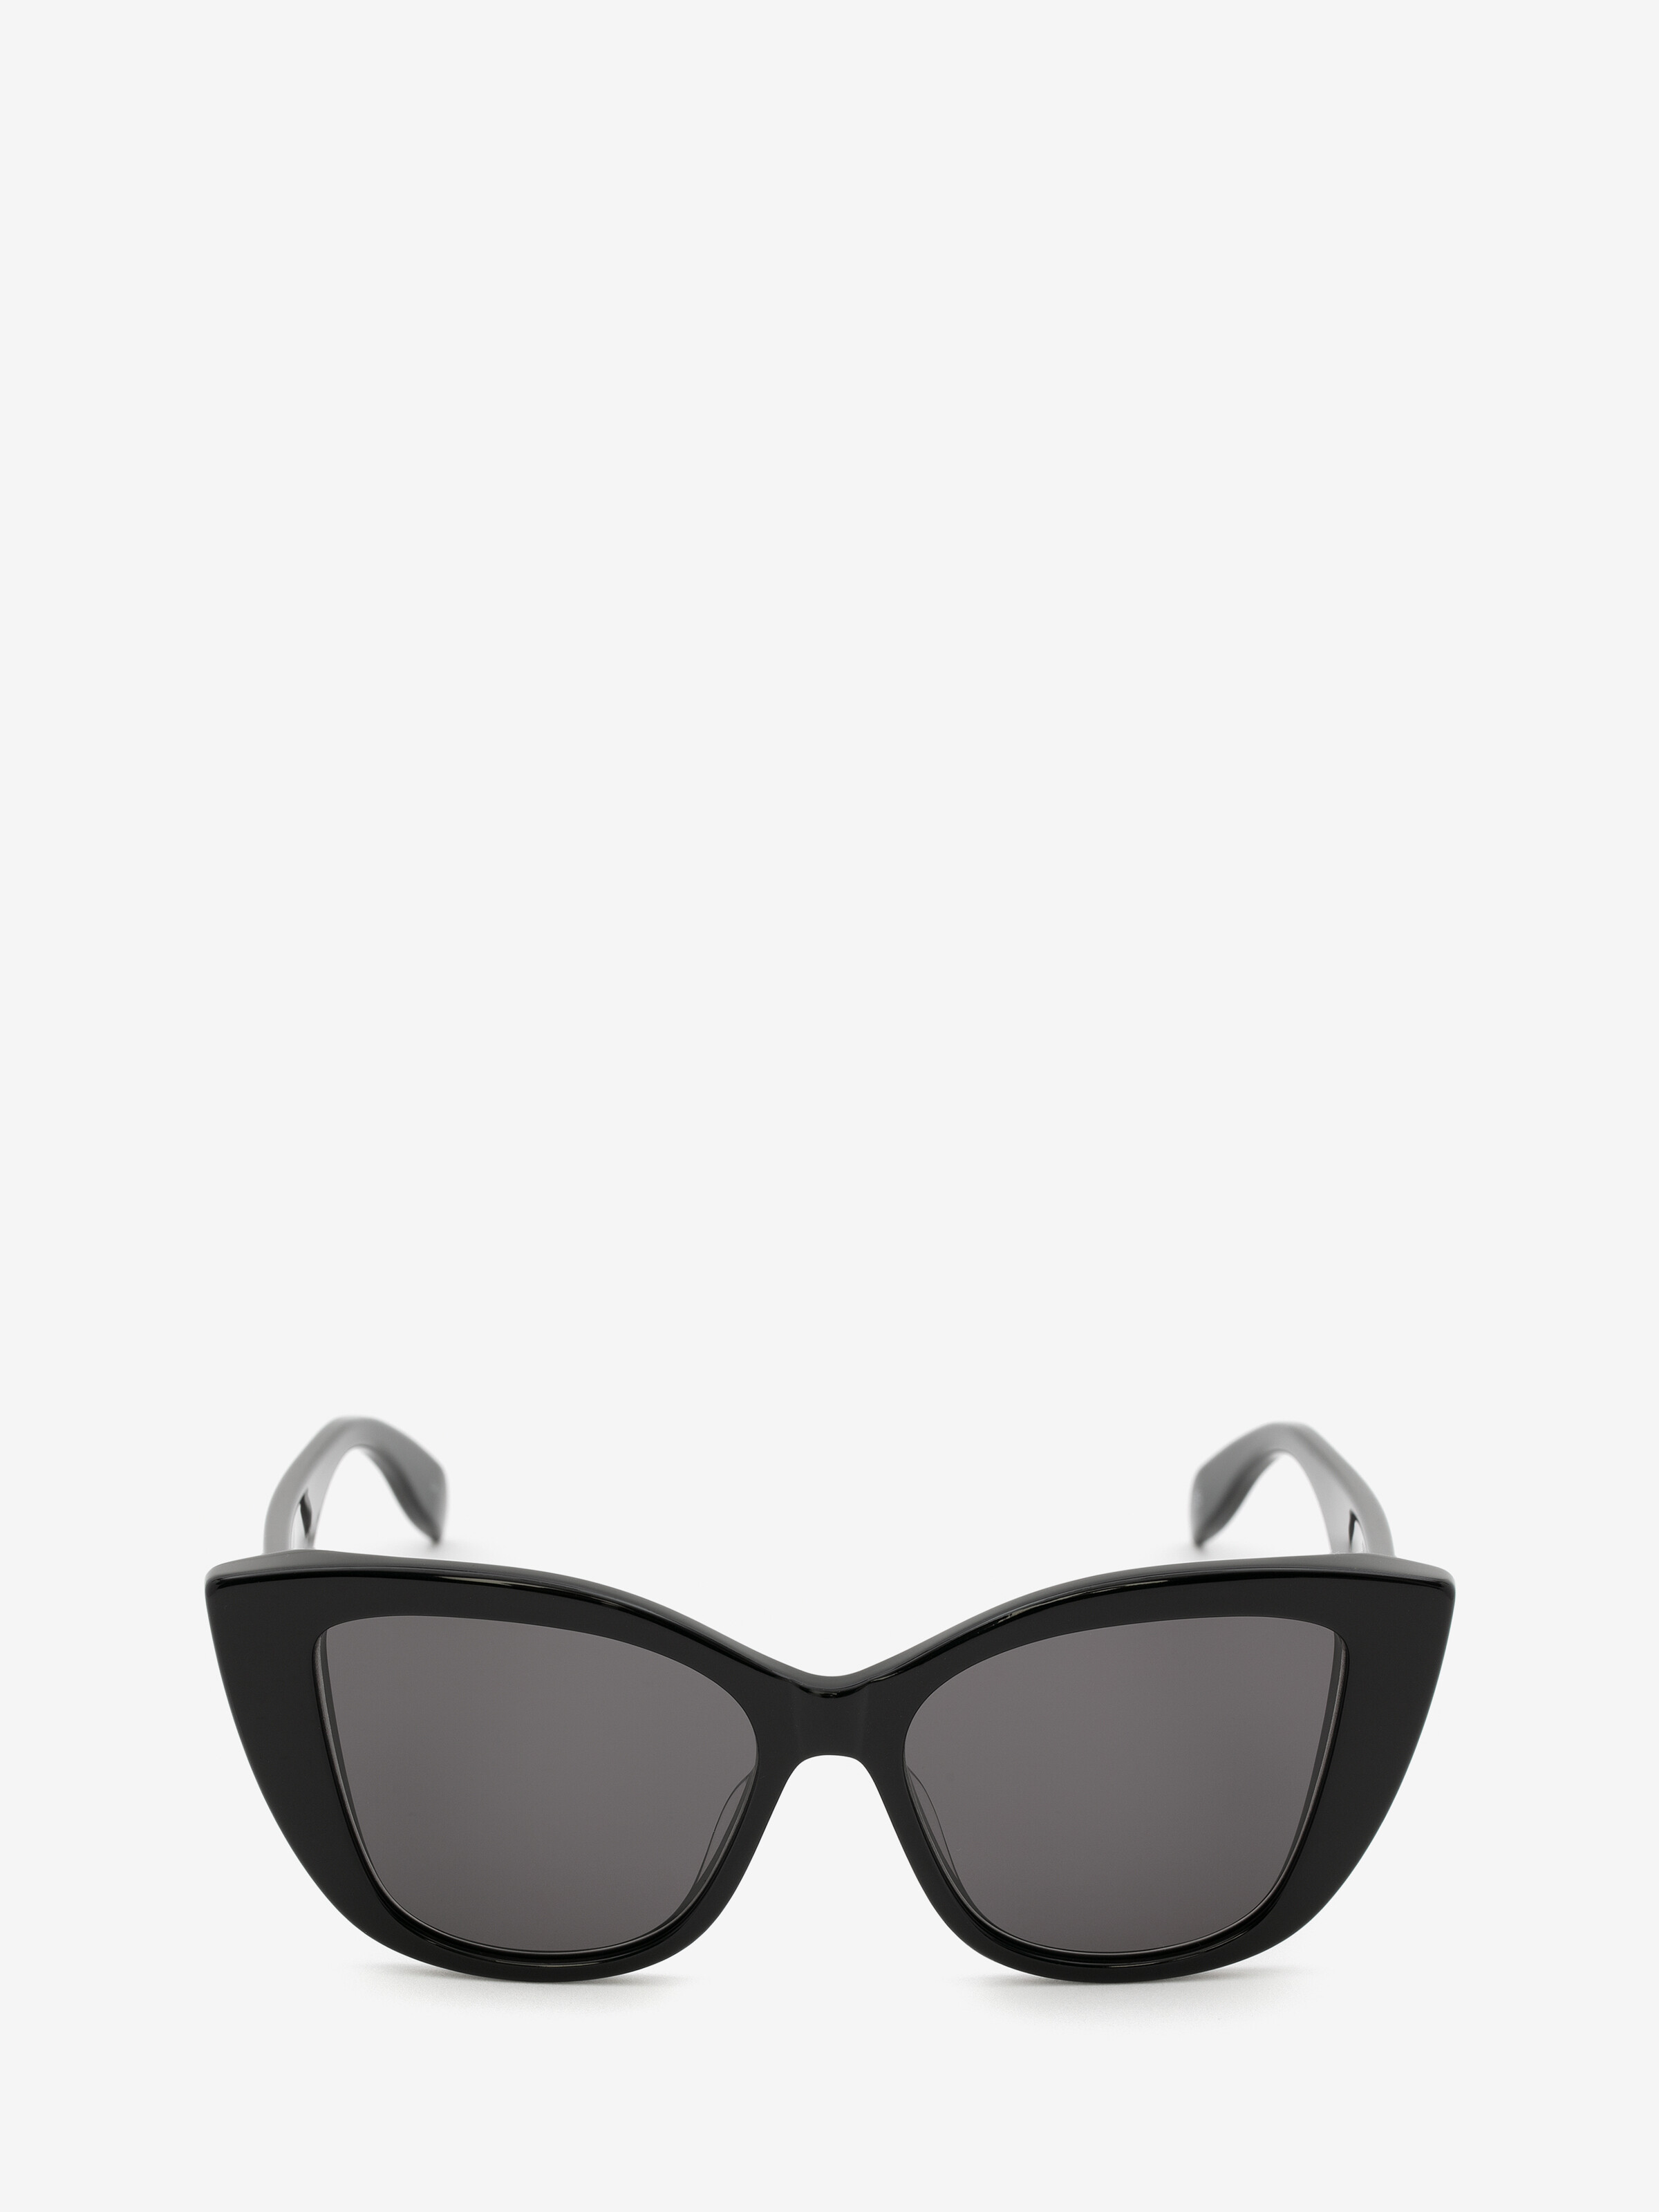 Plateaux Black Uni-Sex Cat-Eye Sunglasses